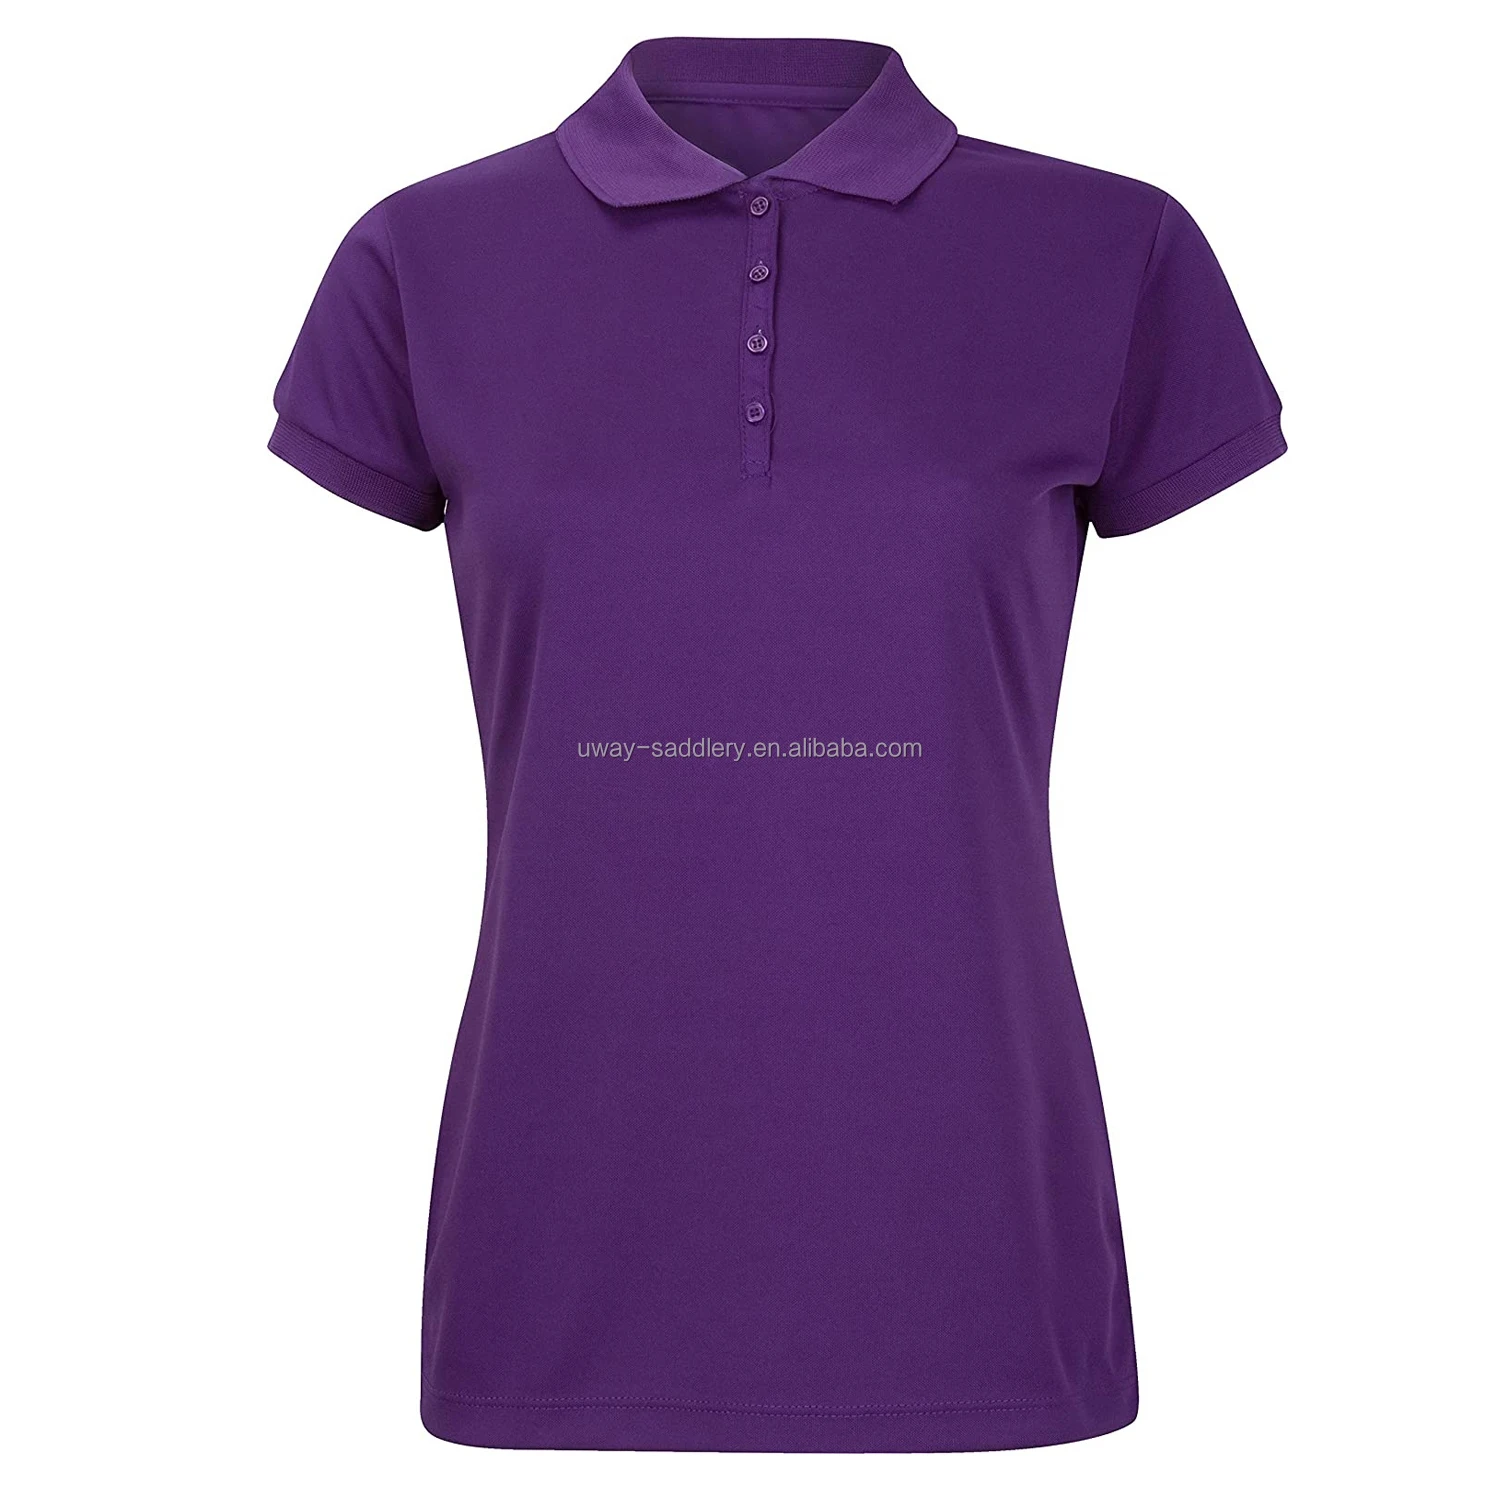 Premium Wear Polo T-Shirt for Junior Girls High-Performance Moisture Wicking Fabric 